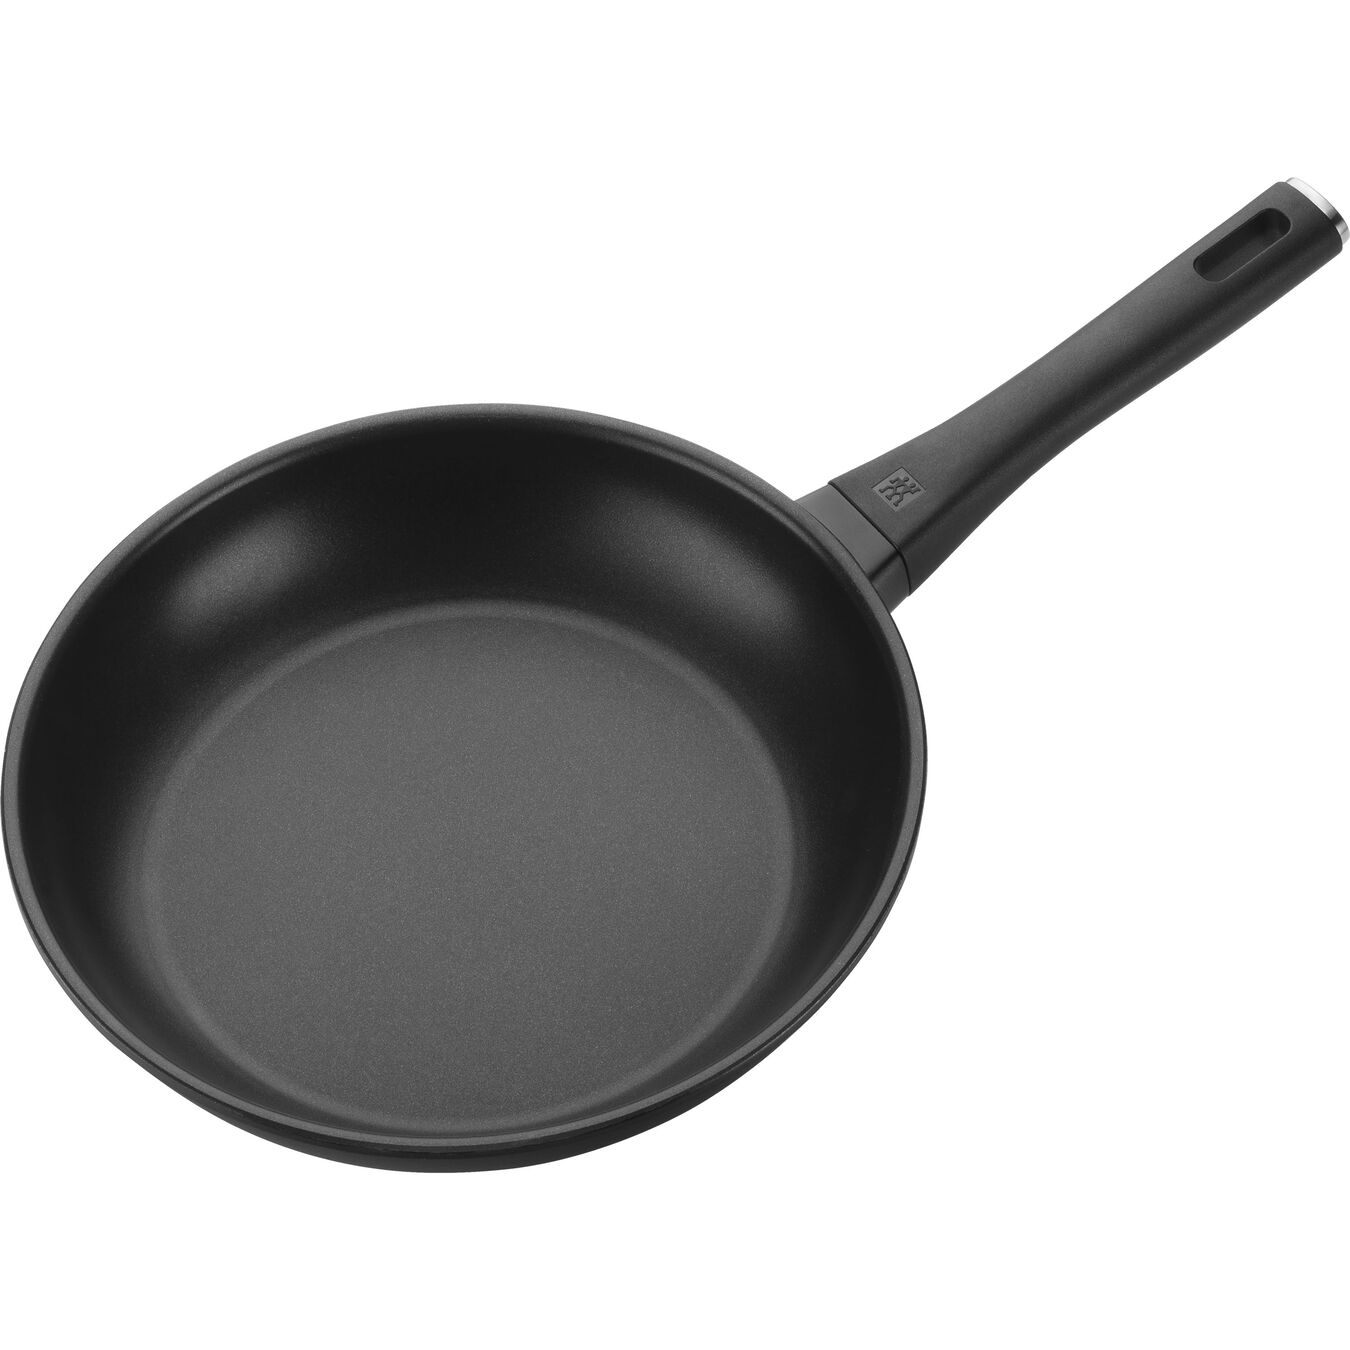 10-inch, Non-stick, Aluminum Fry Pan,,large 7